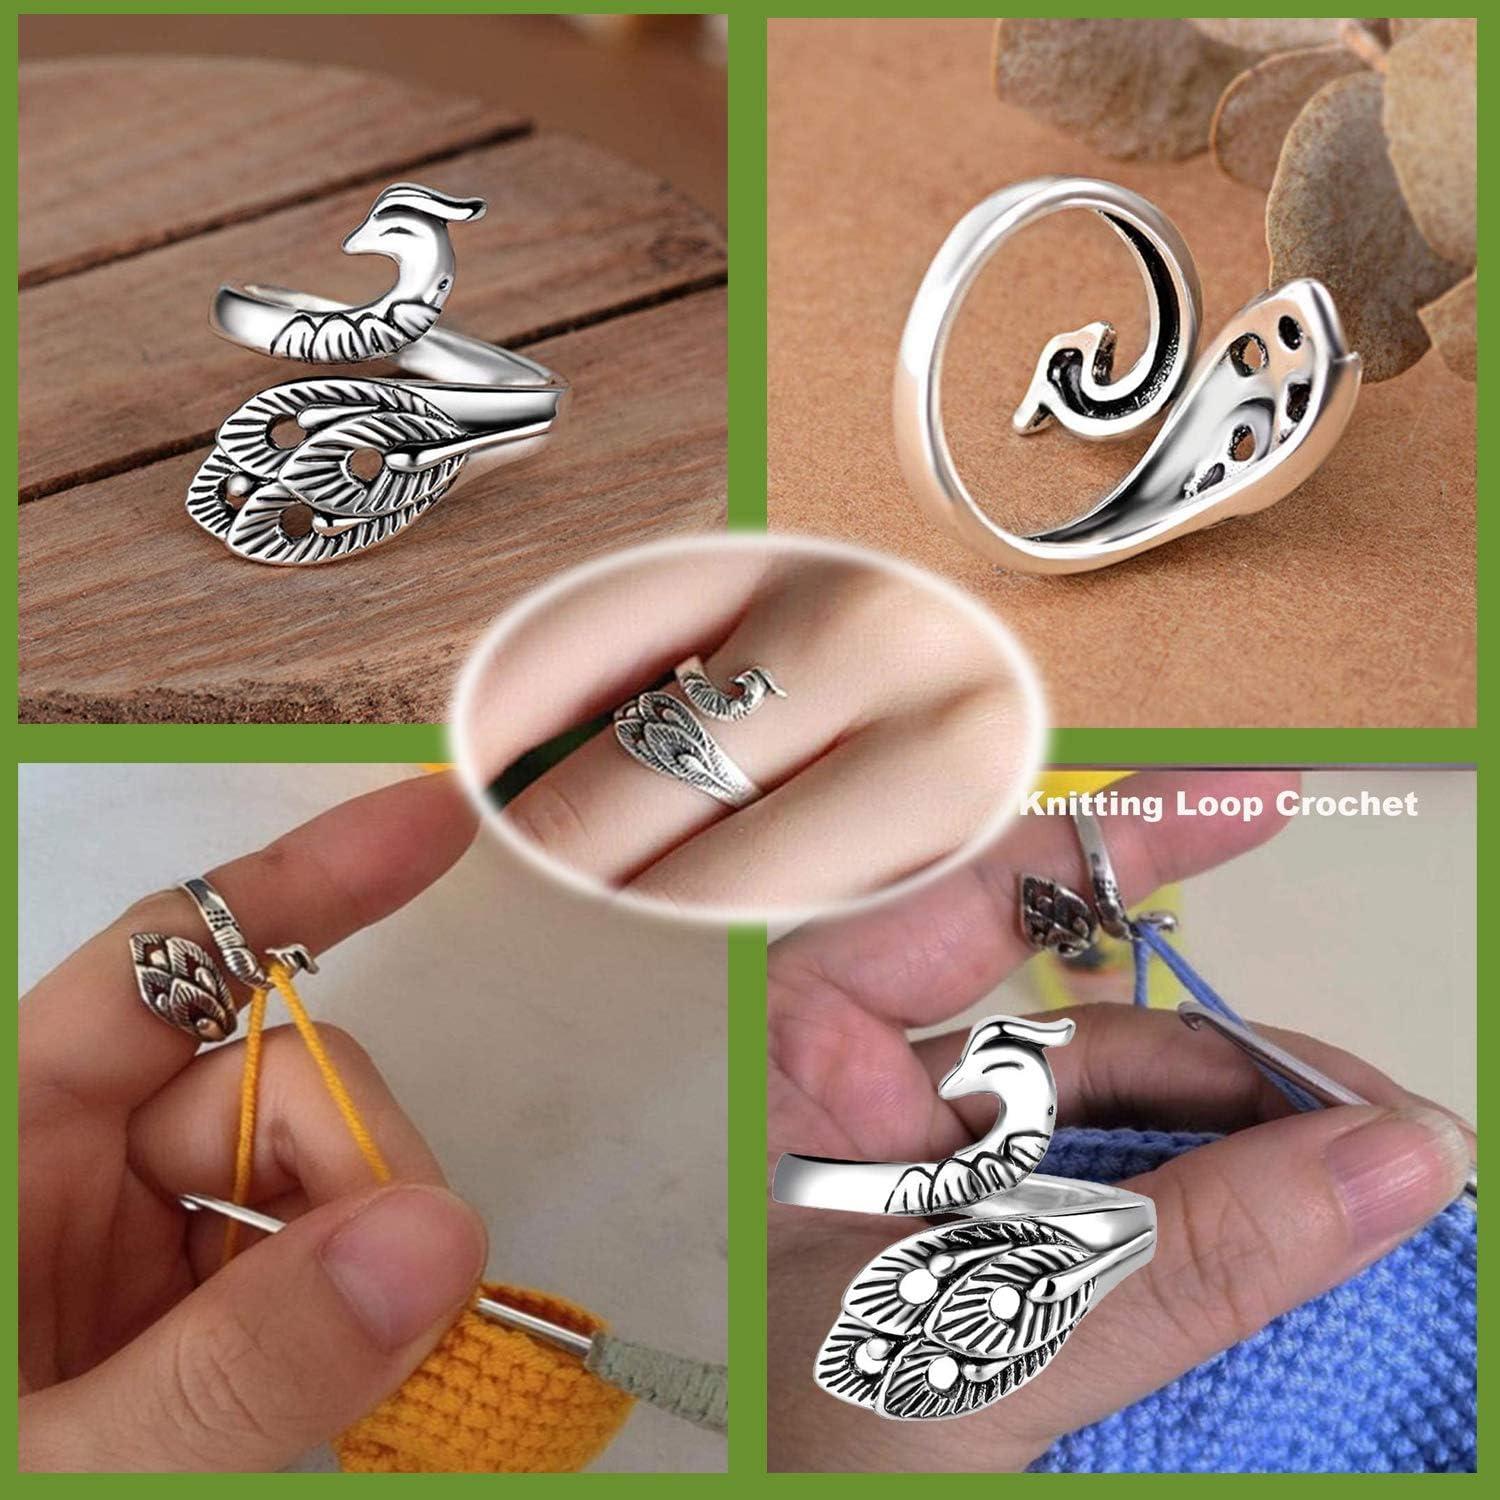 3pcs Adjustable Knitting Loop Crochet, Crochet Ring - Knitting Accessories,  Peacock Open Finger Ring/adjustable Braided Ring For Faster Knitting